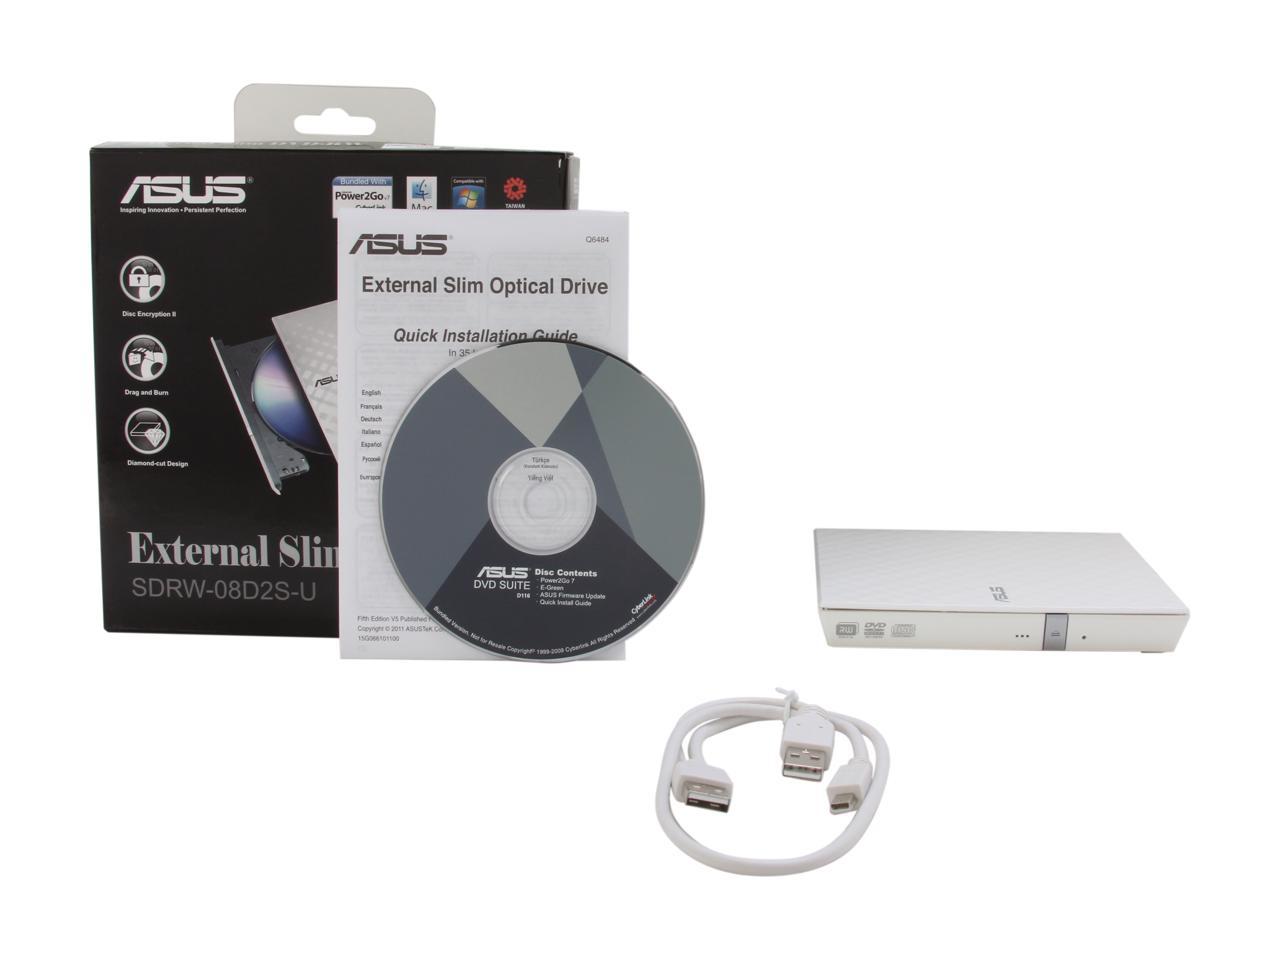 Asus Usb 2 0 White External Slim Cd Dvd Re Writer Mac Os Compatible Model Sdrw 08d2s U Newegg Com